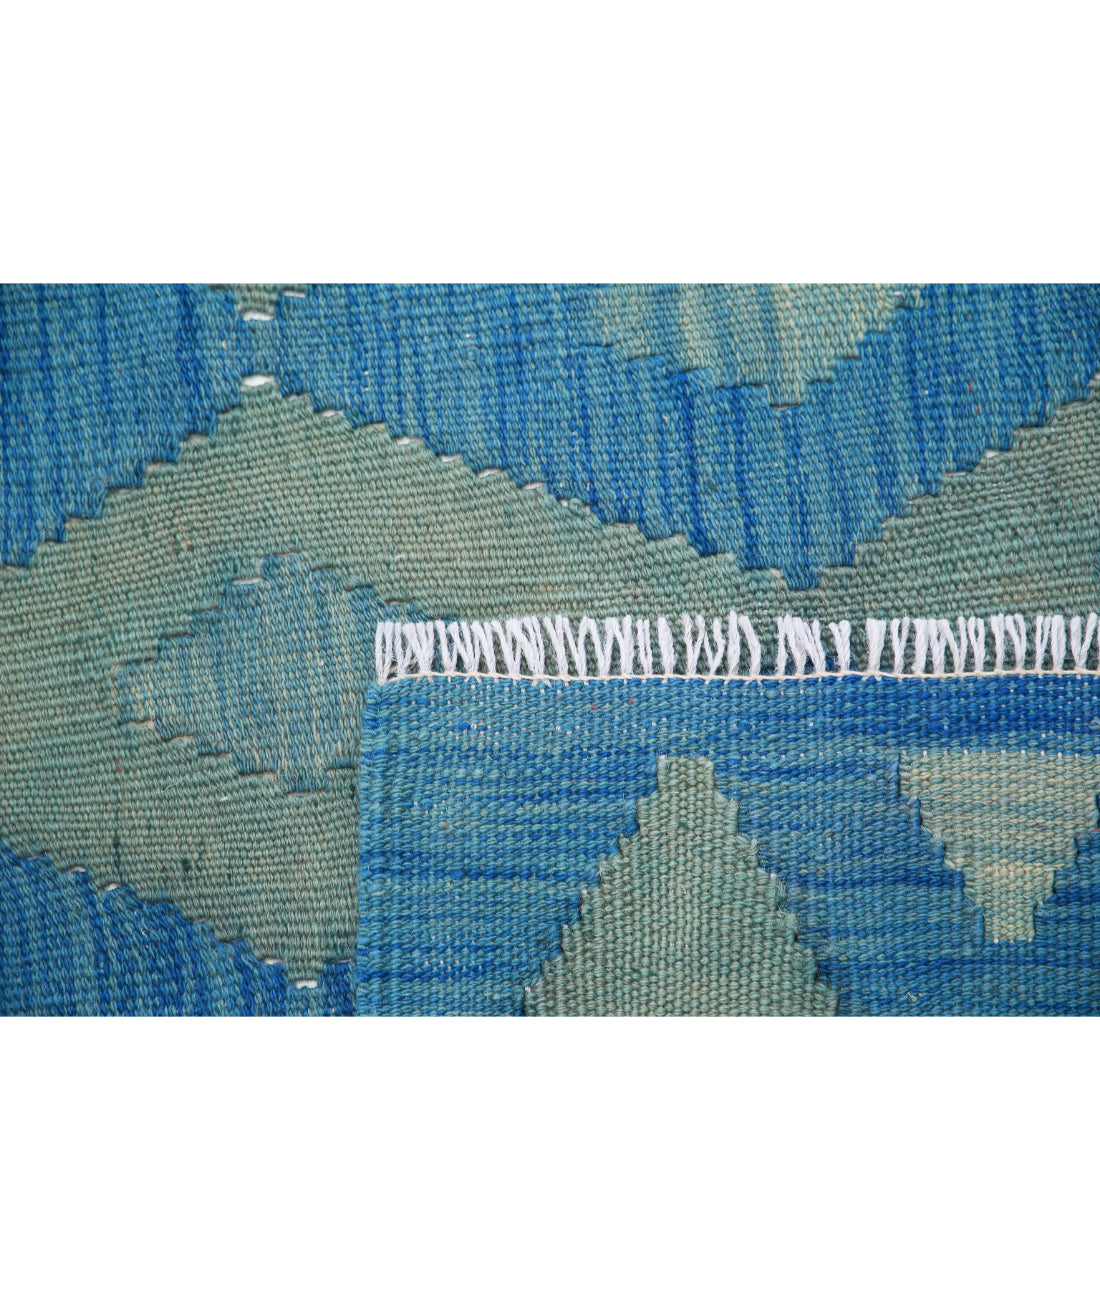 Hand Knotted Maimana Kilim Wool Kilim Rug - 2'6'' x 4'1'' 2'6'' x 4'1'' (75 X 123) / Blue / Blue